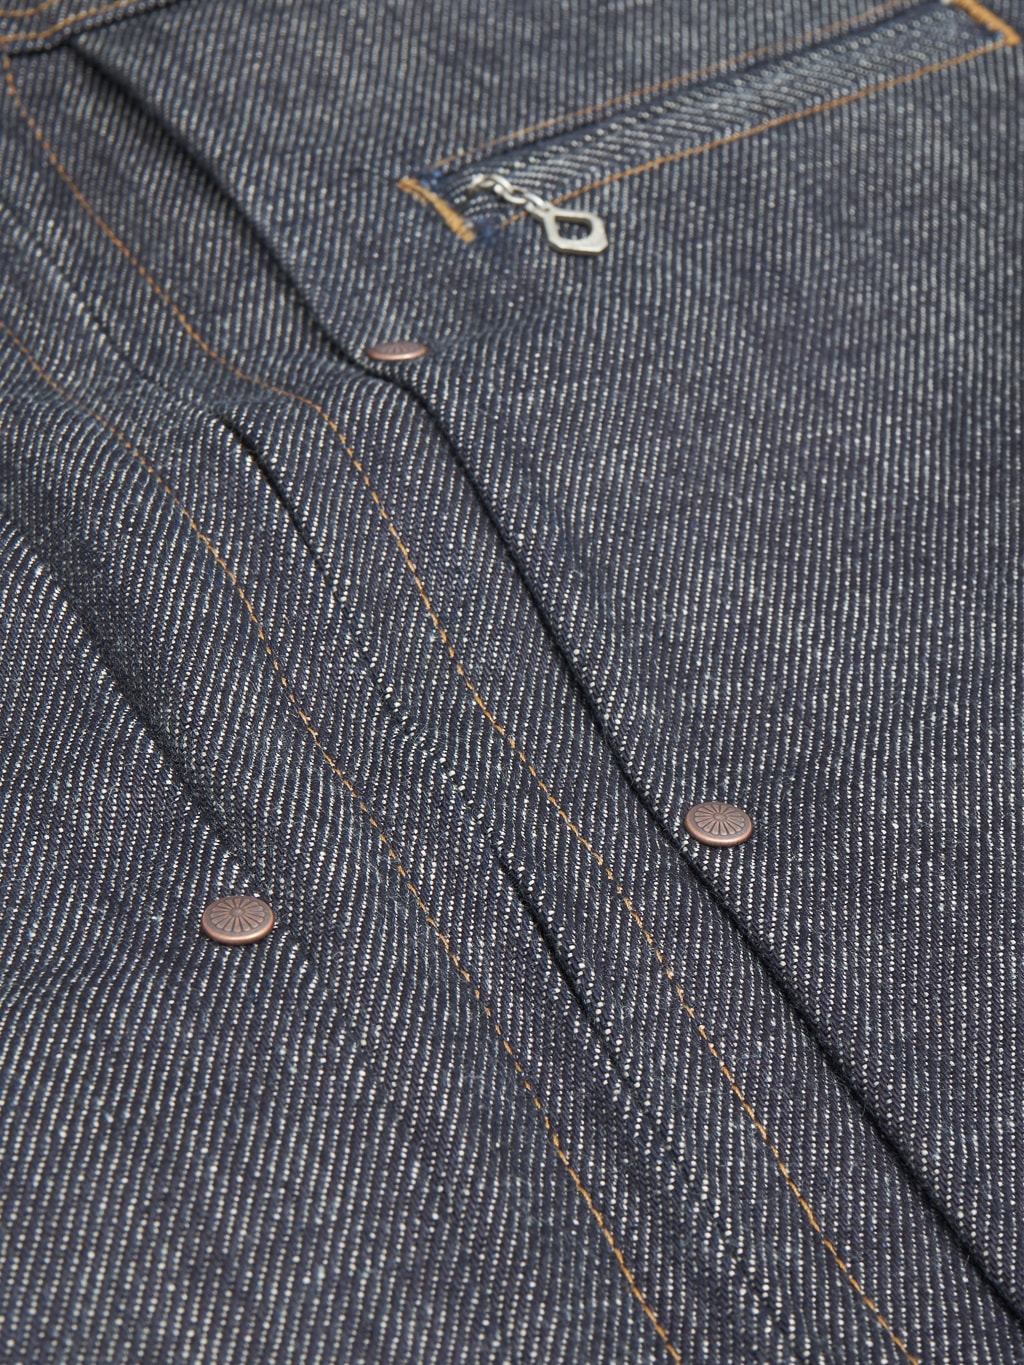 Freenote cloth denim shearling jacket chest zipper heavy duty reproduction